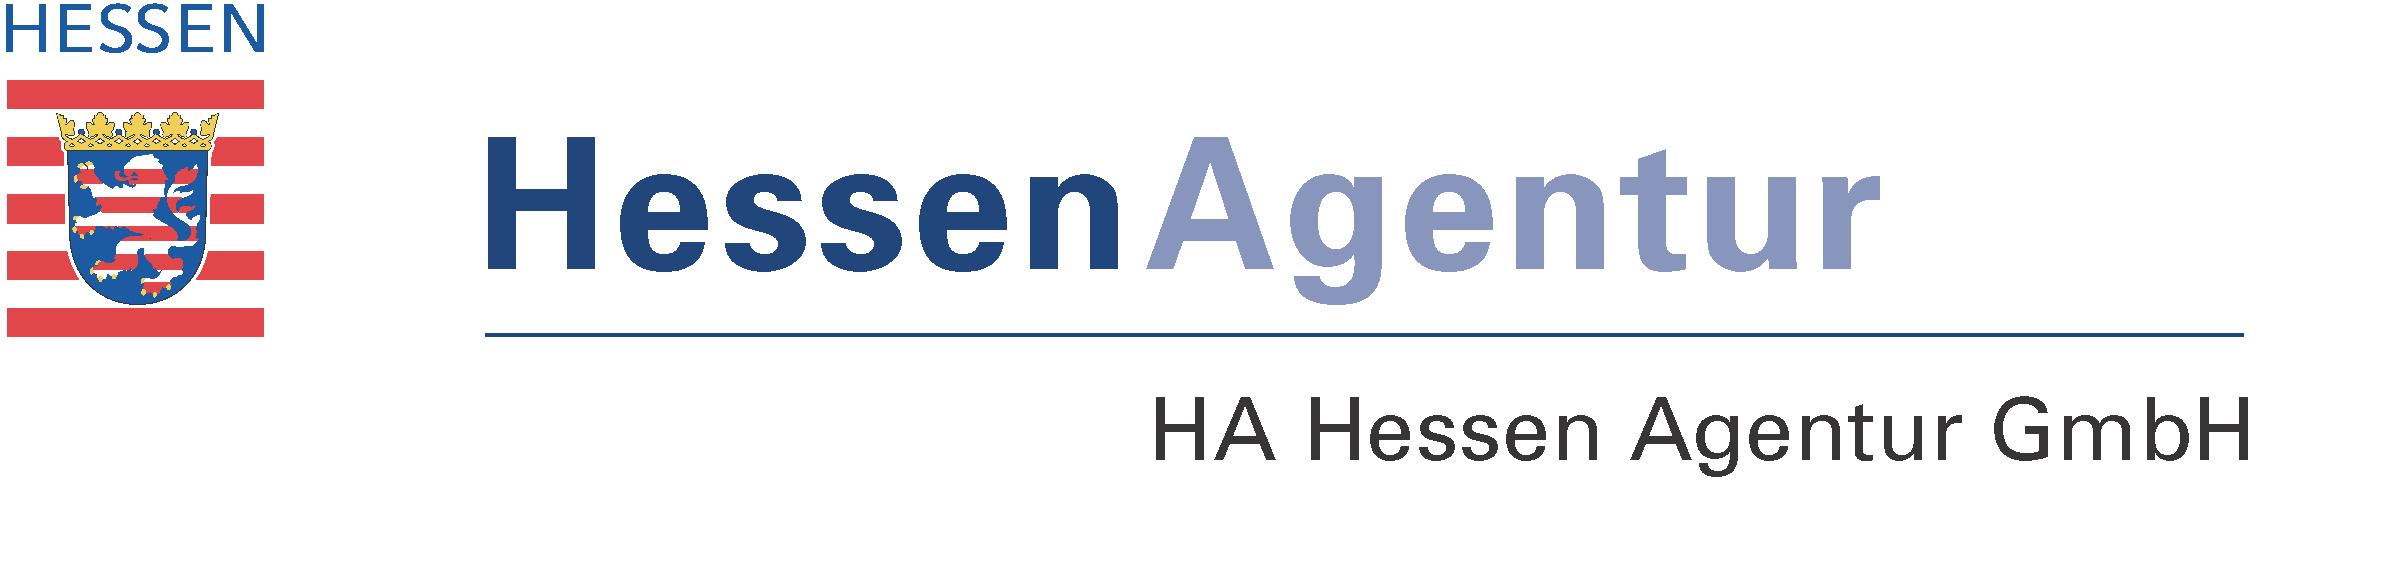 Logo_HA